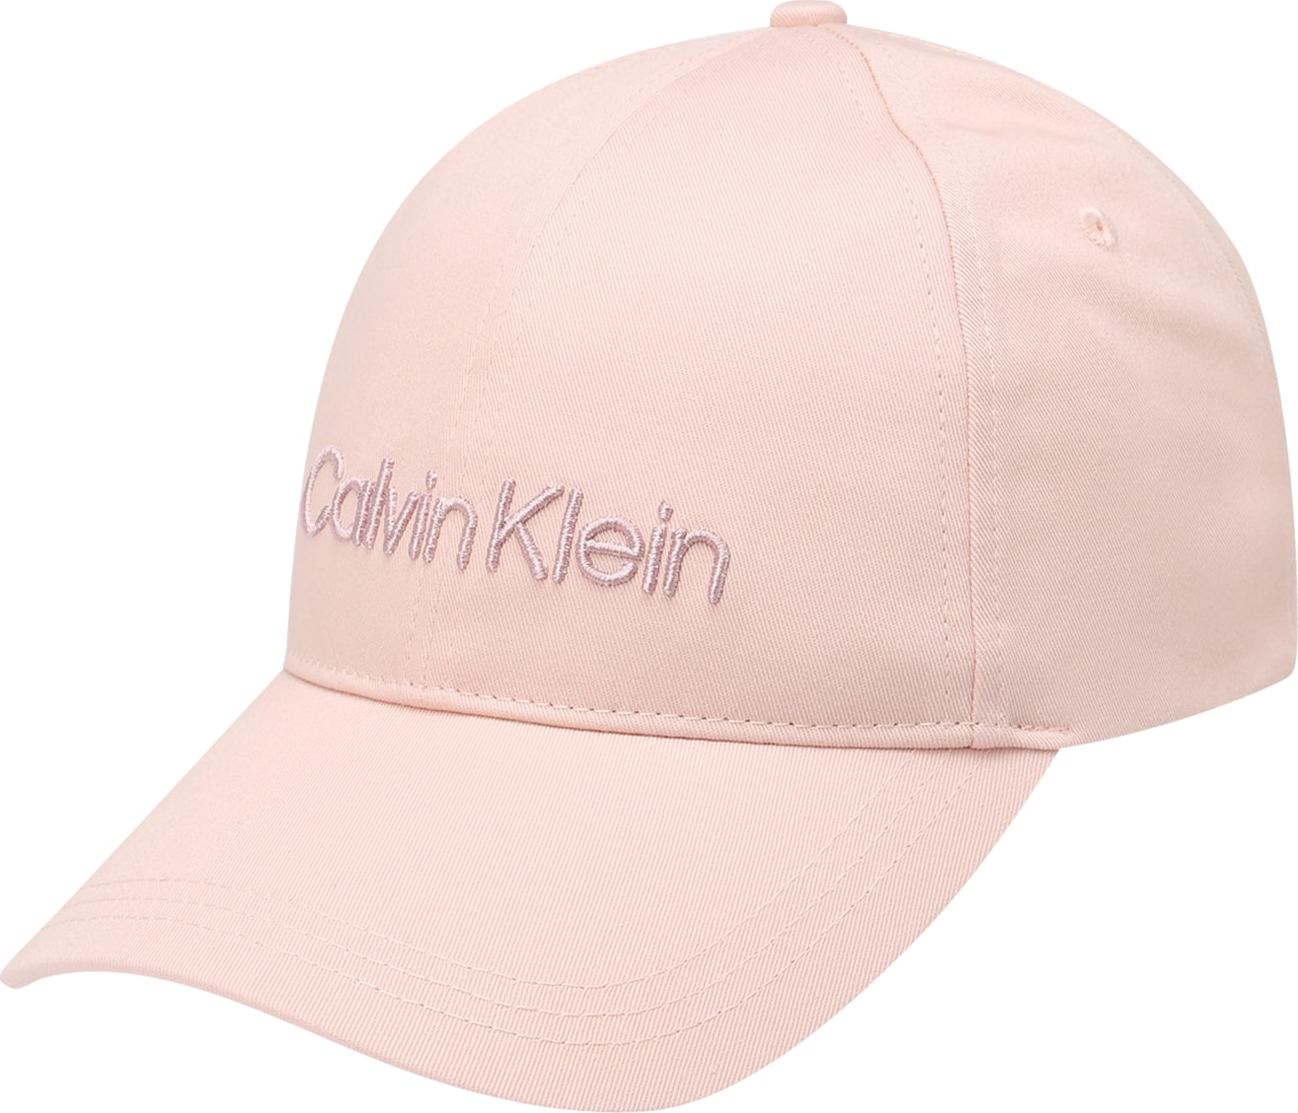 Calvin Klein Čepice růžová